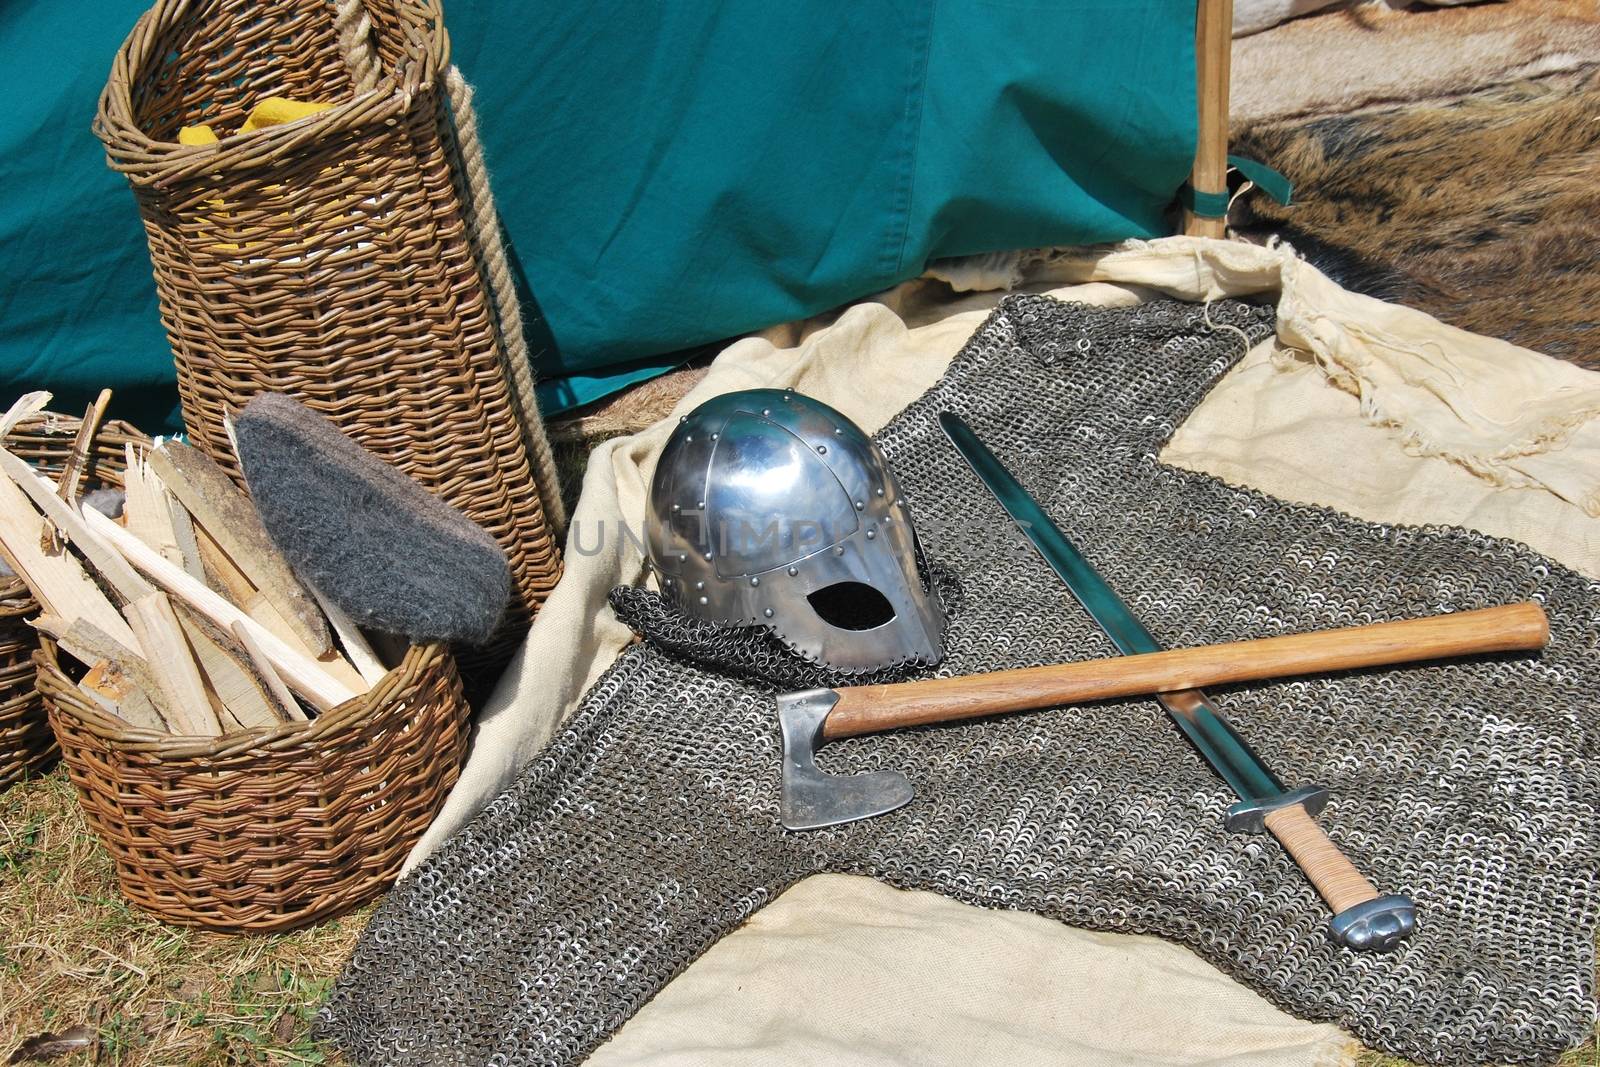 Viking Helmet on the ground by pauws99